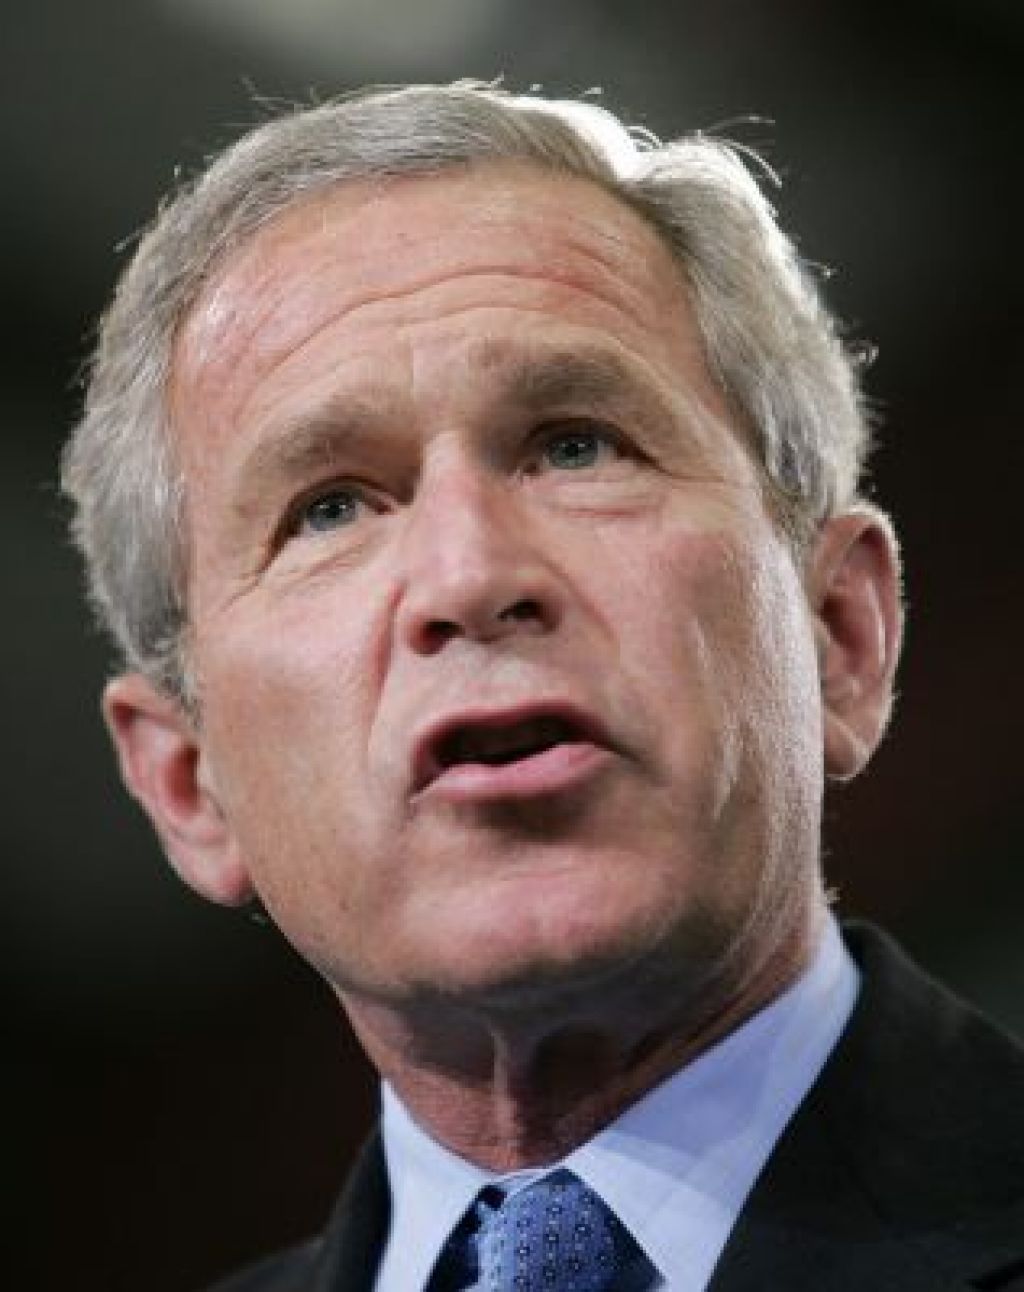 Bush sestavlja proračun za teroriste